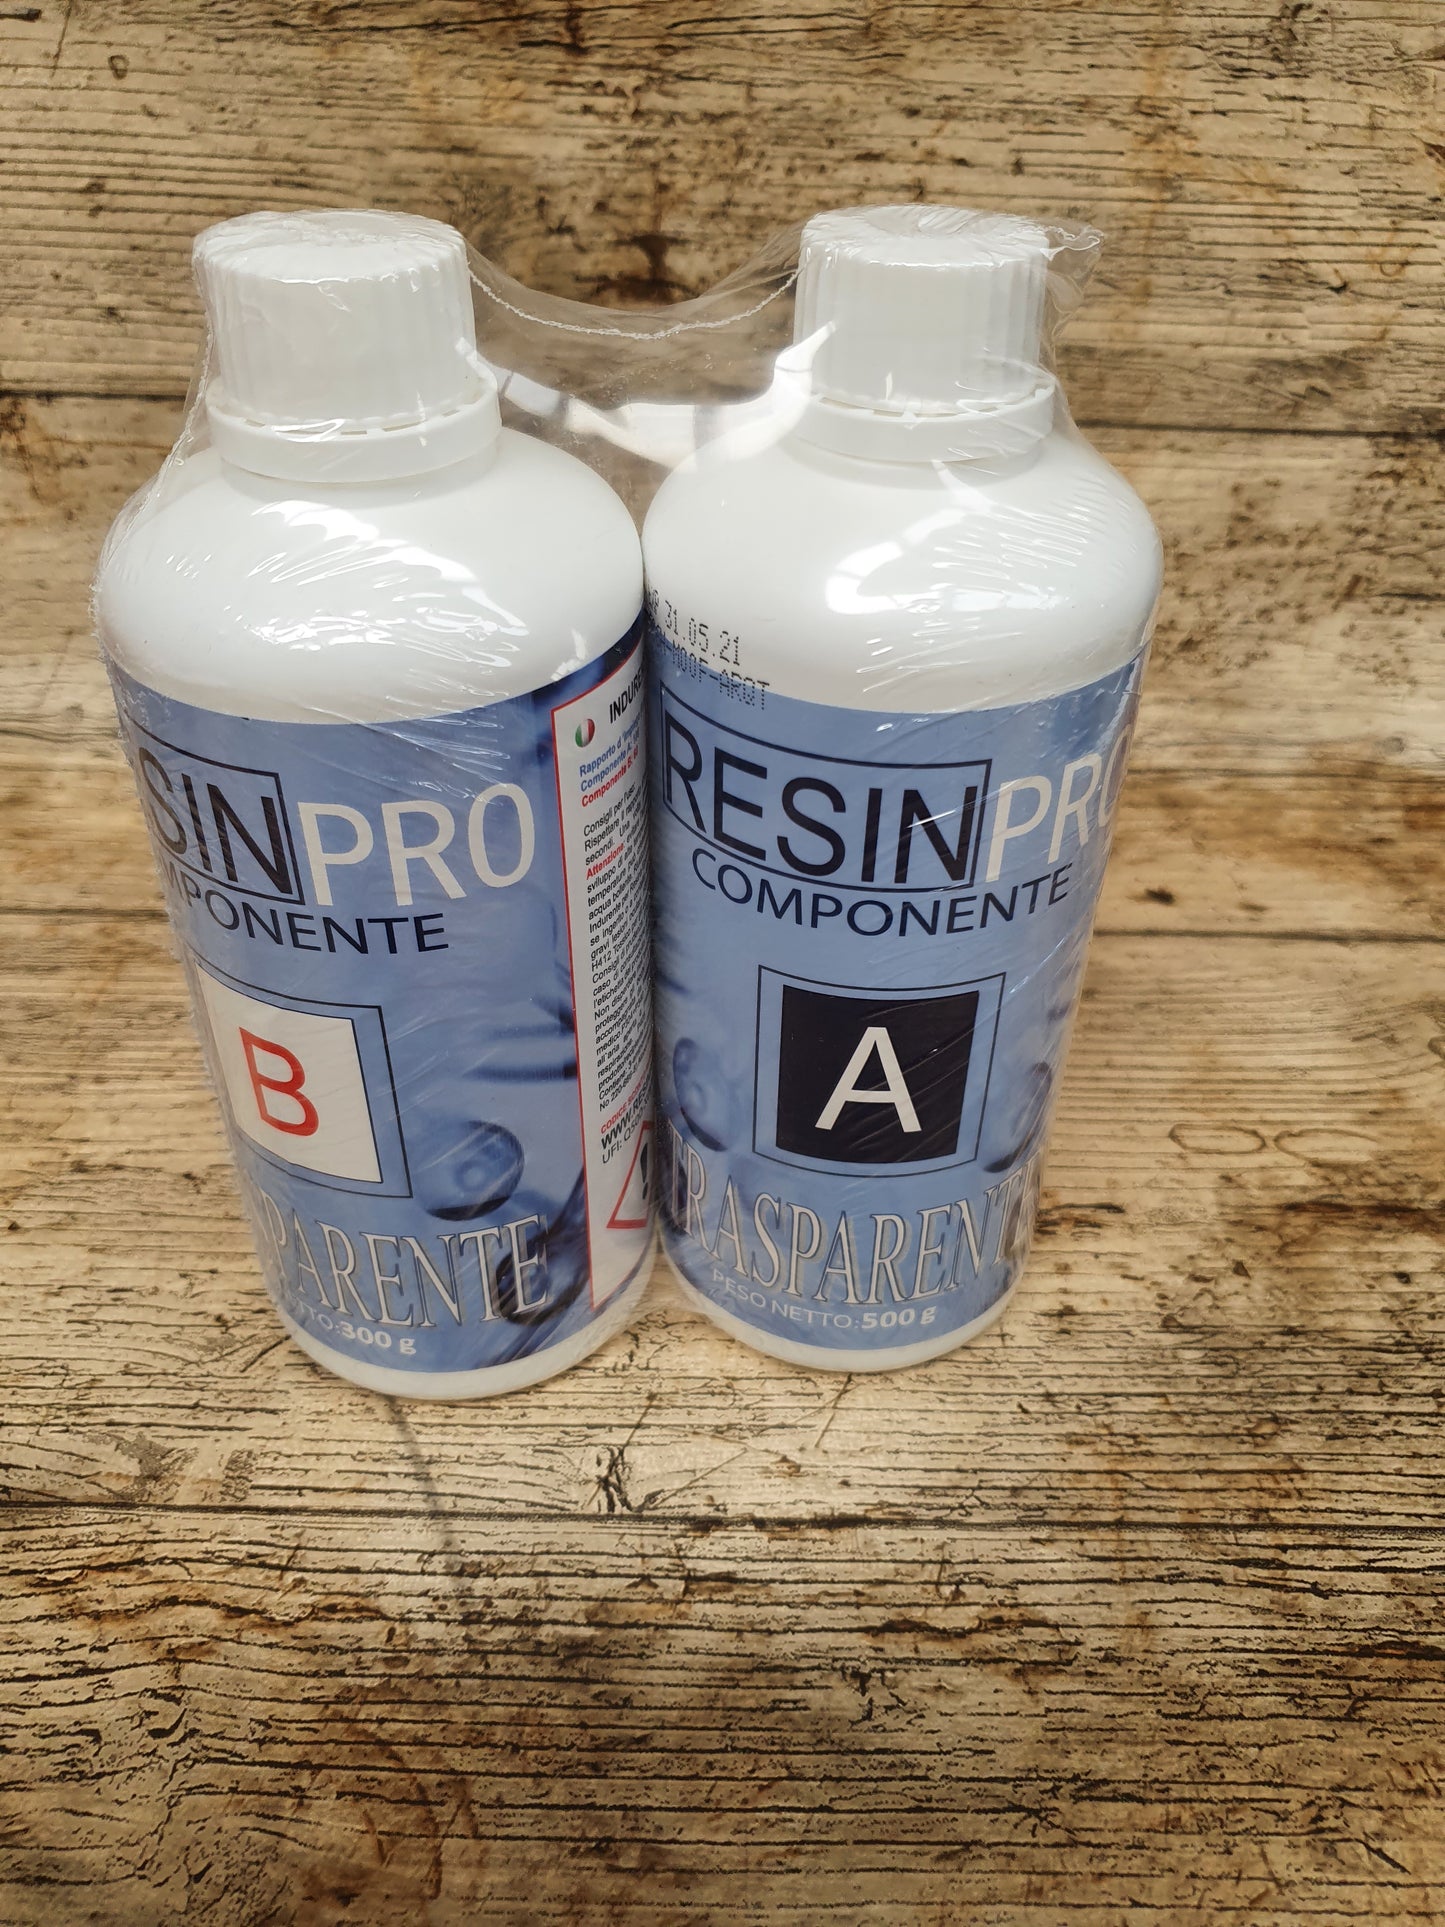 Resin Pro Transparent Epoxy